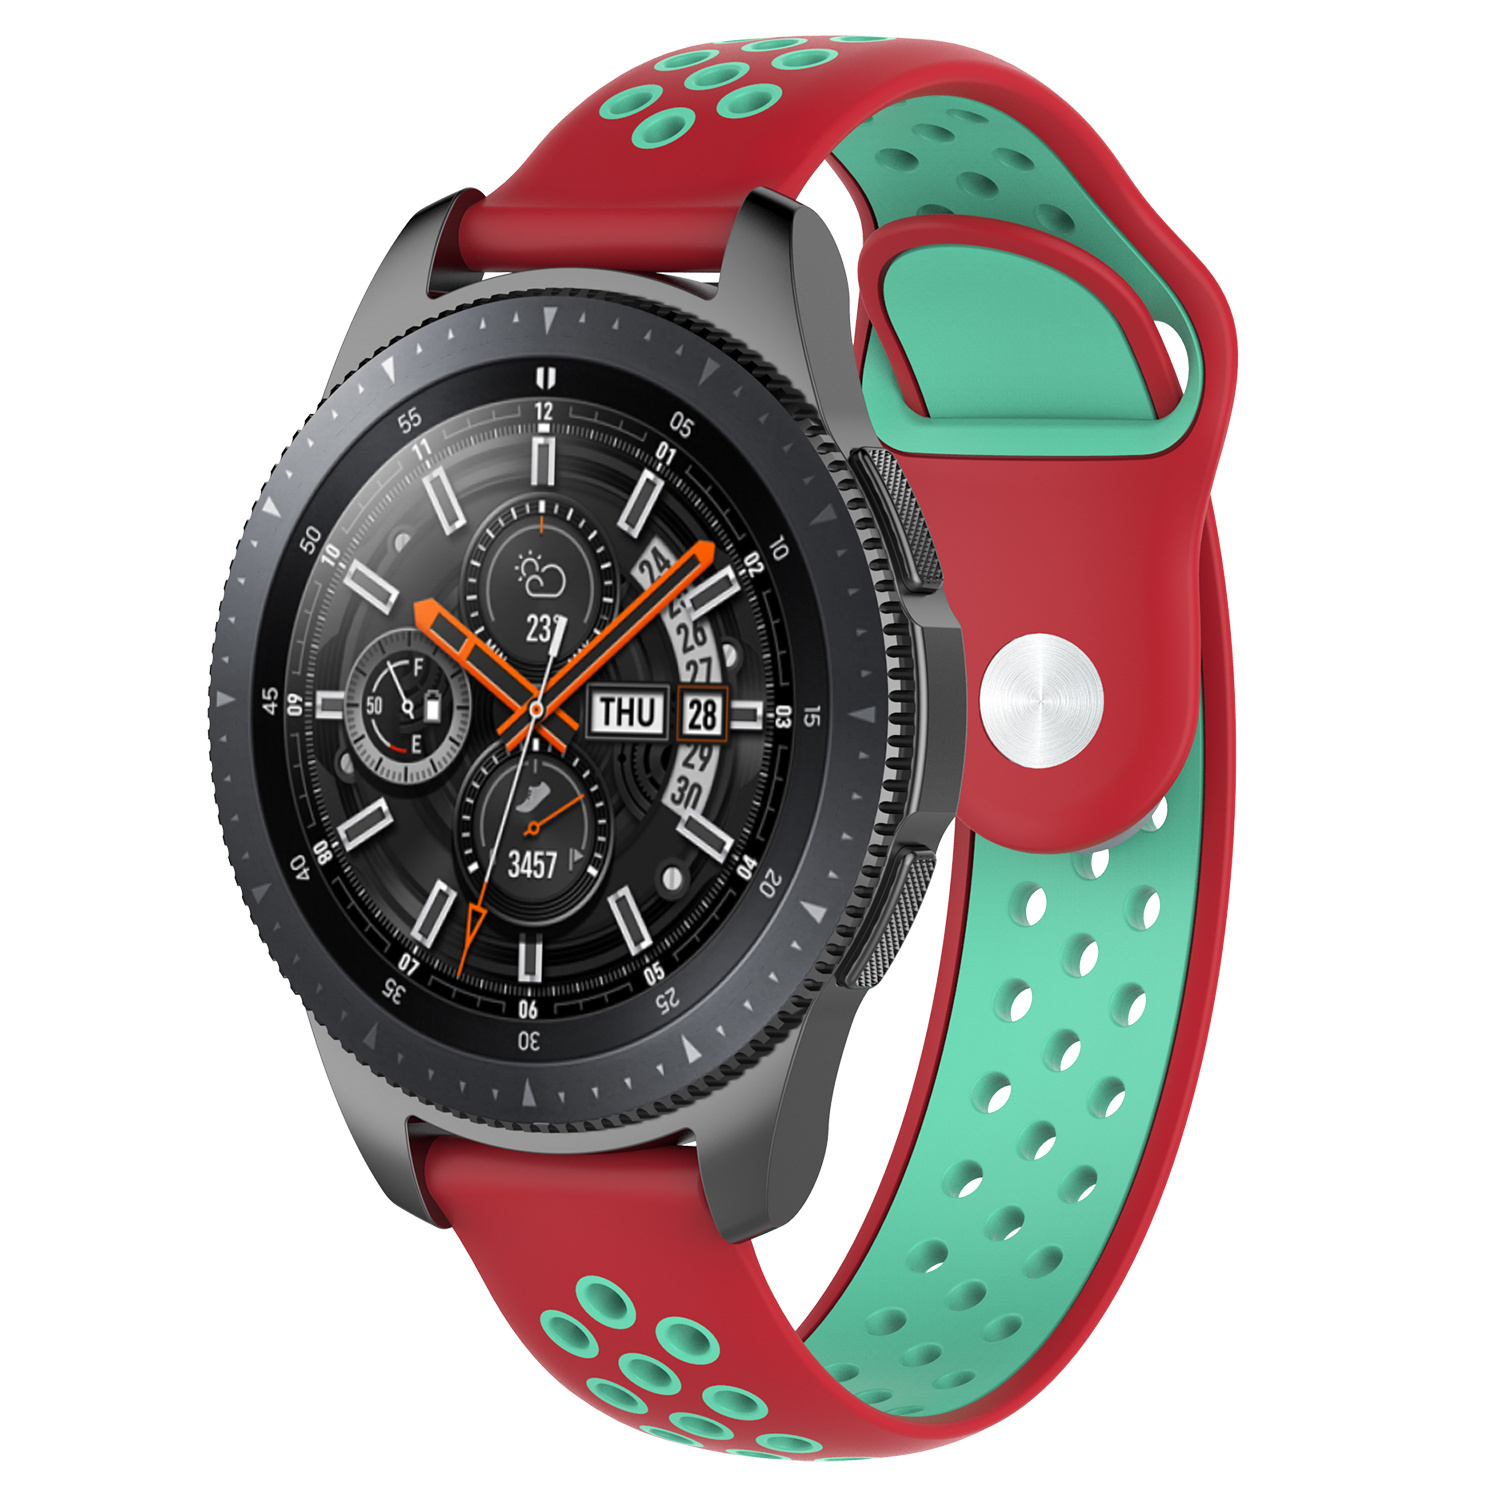 Huawei Watch GT dupla sport szalag - piros teal